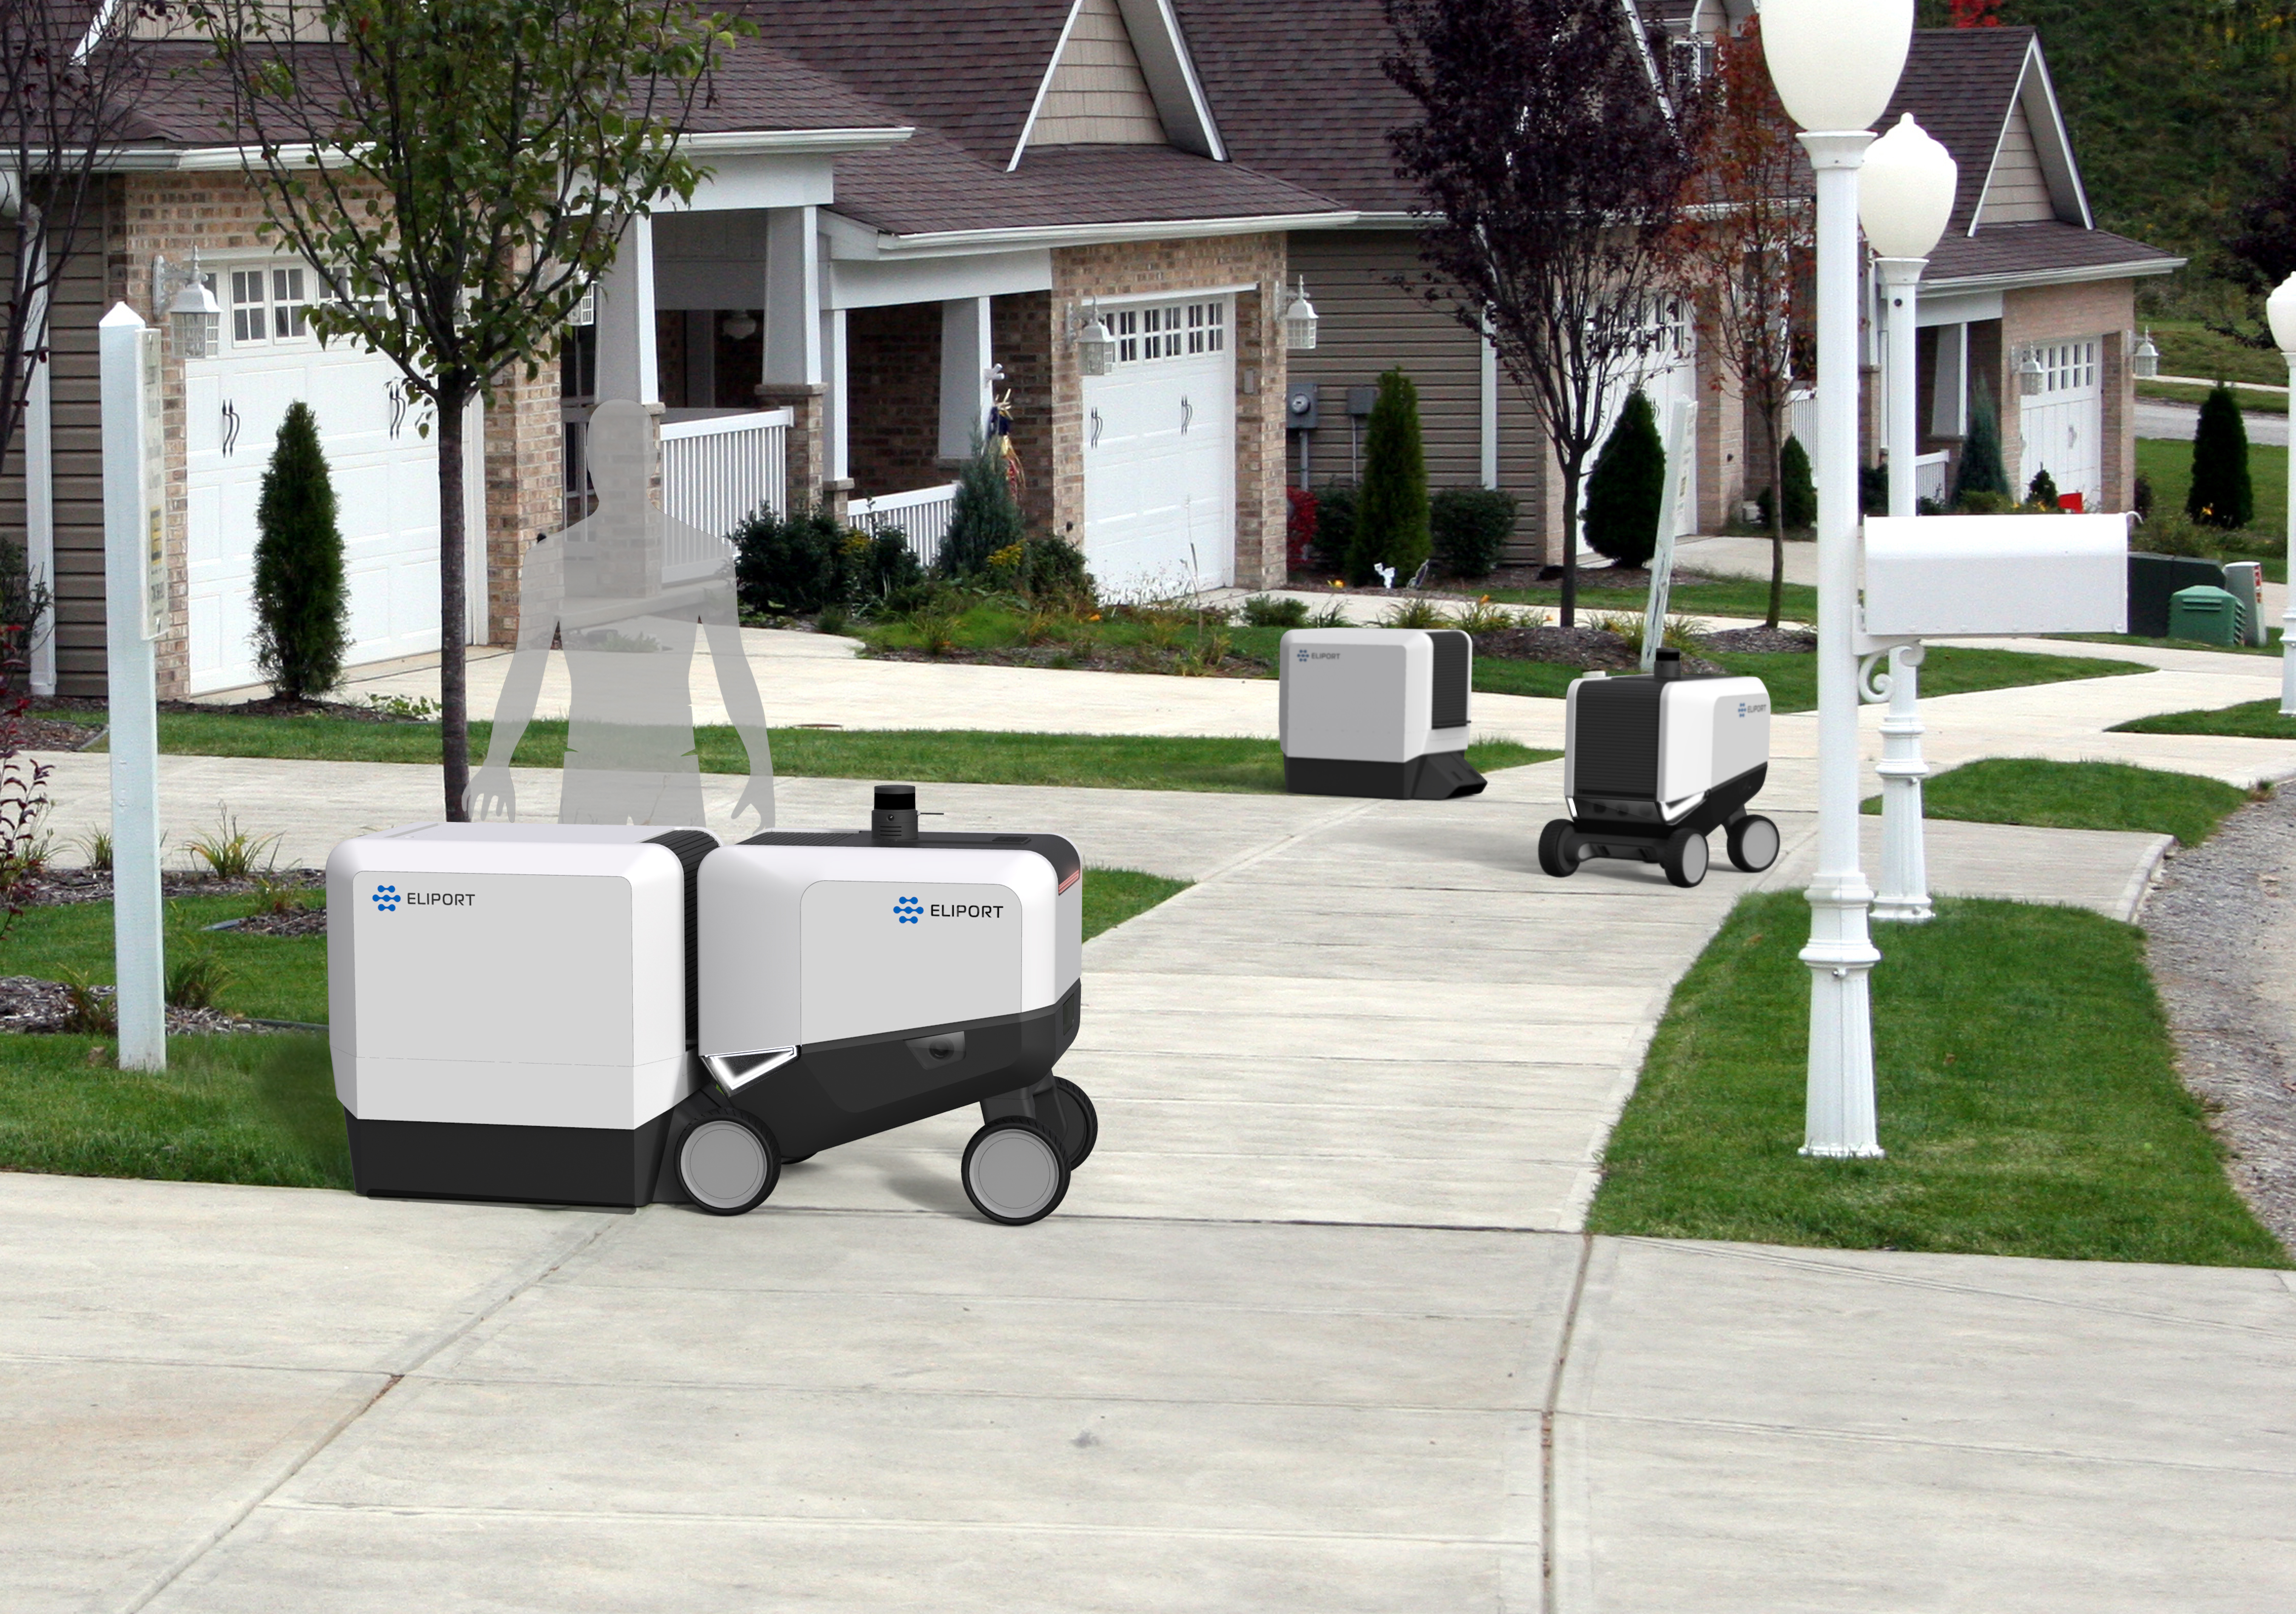 Eliport: Friendly neighborhood robots for cheaper last-mile deliveries